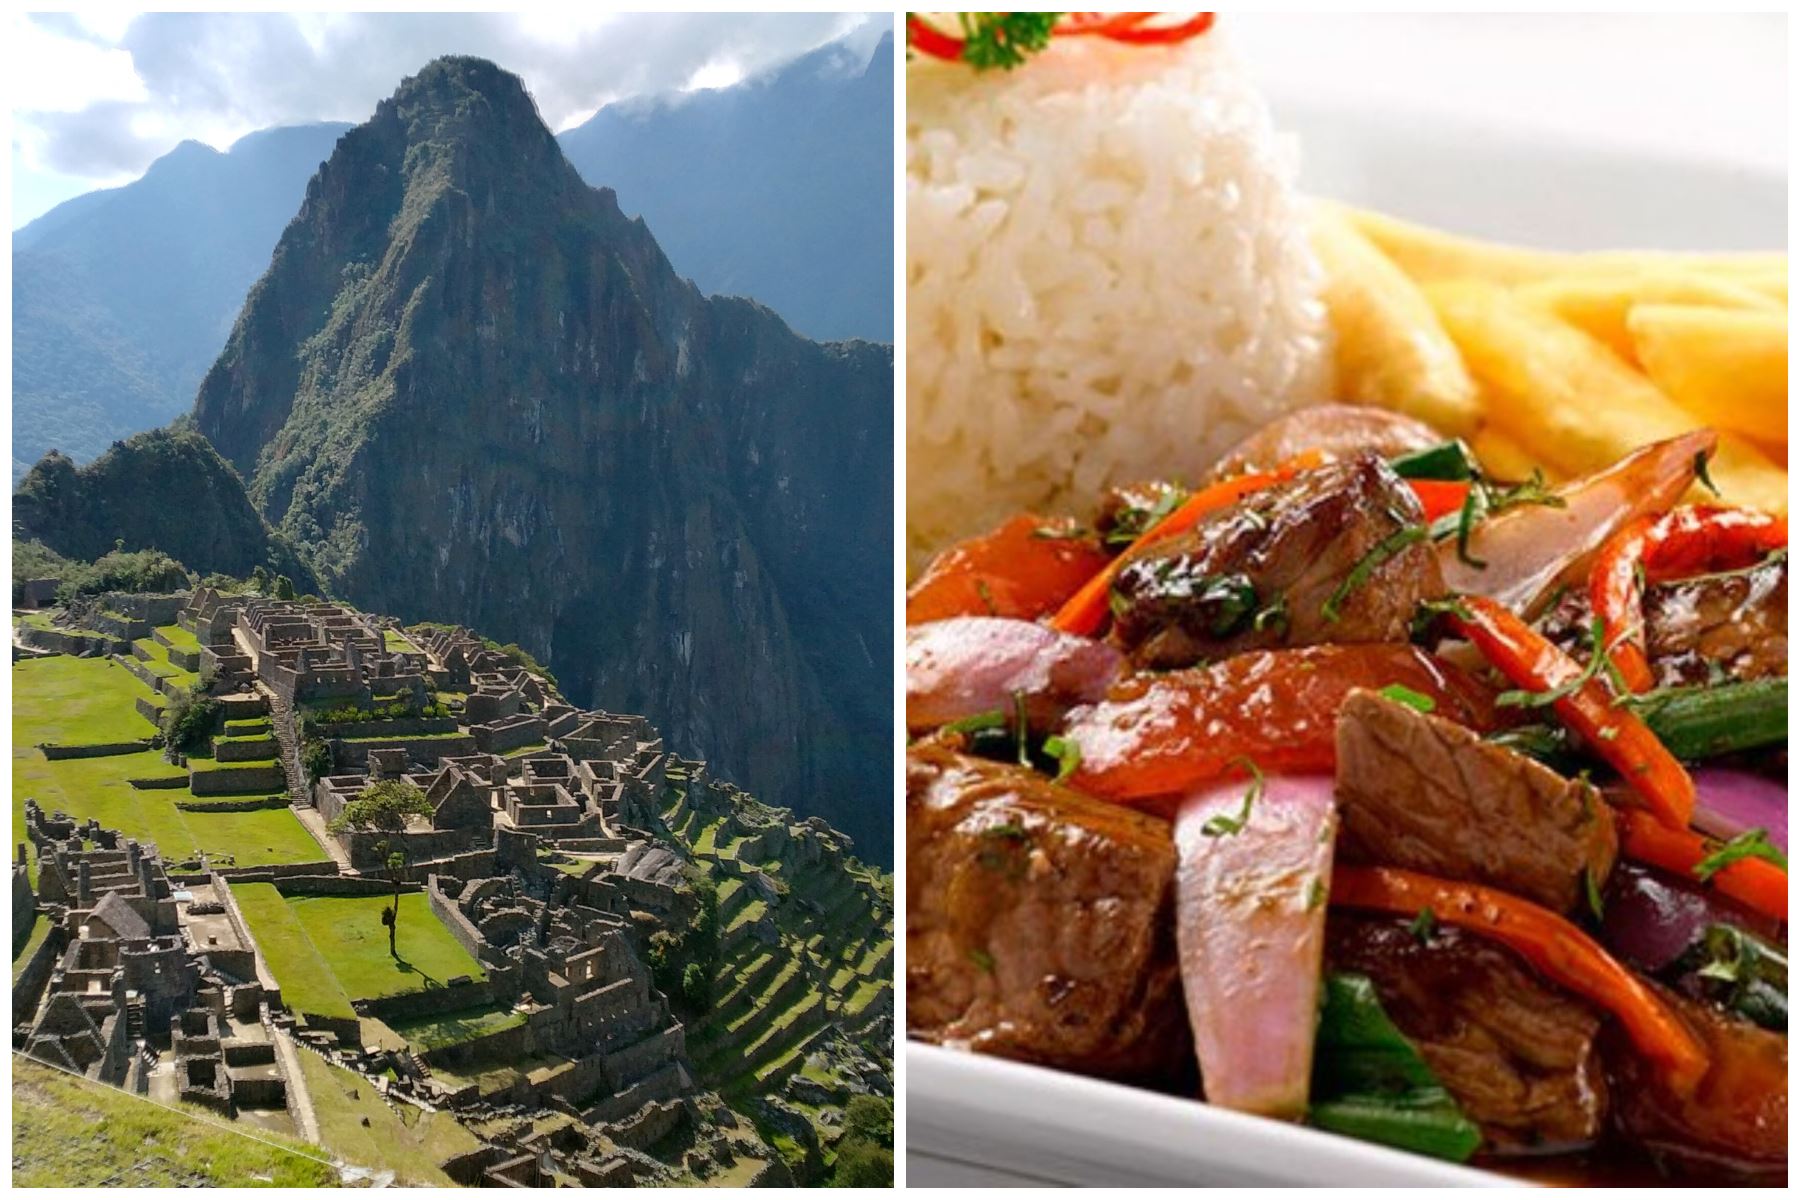 Google Japan v propagačním videu vyzdvihuje peruánskou gastronomii a Machu Picchu